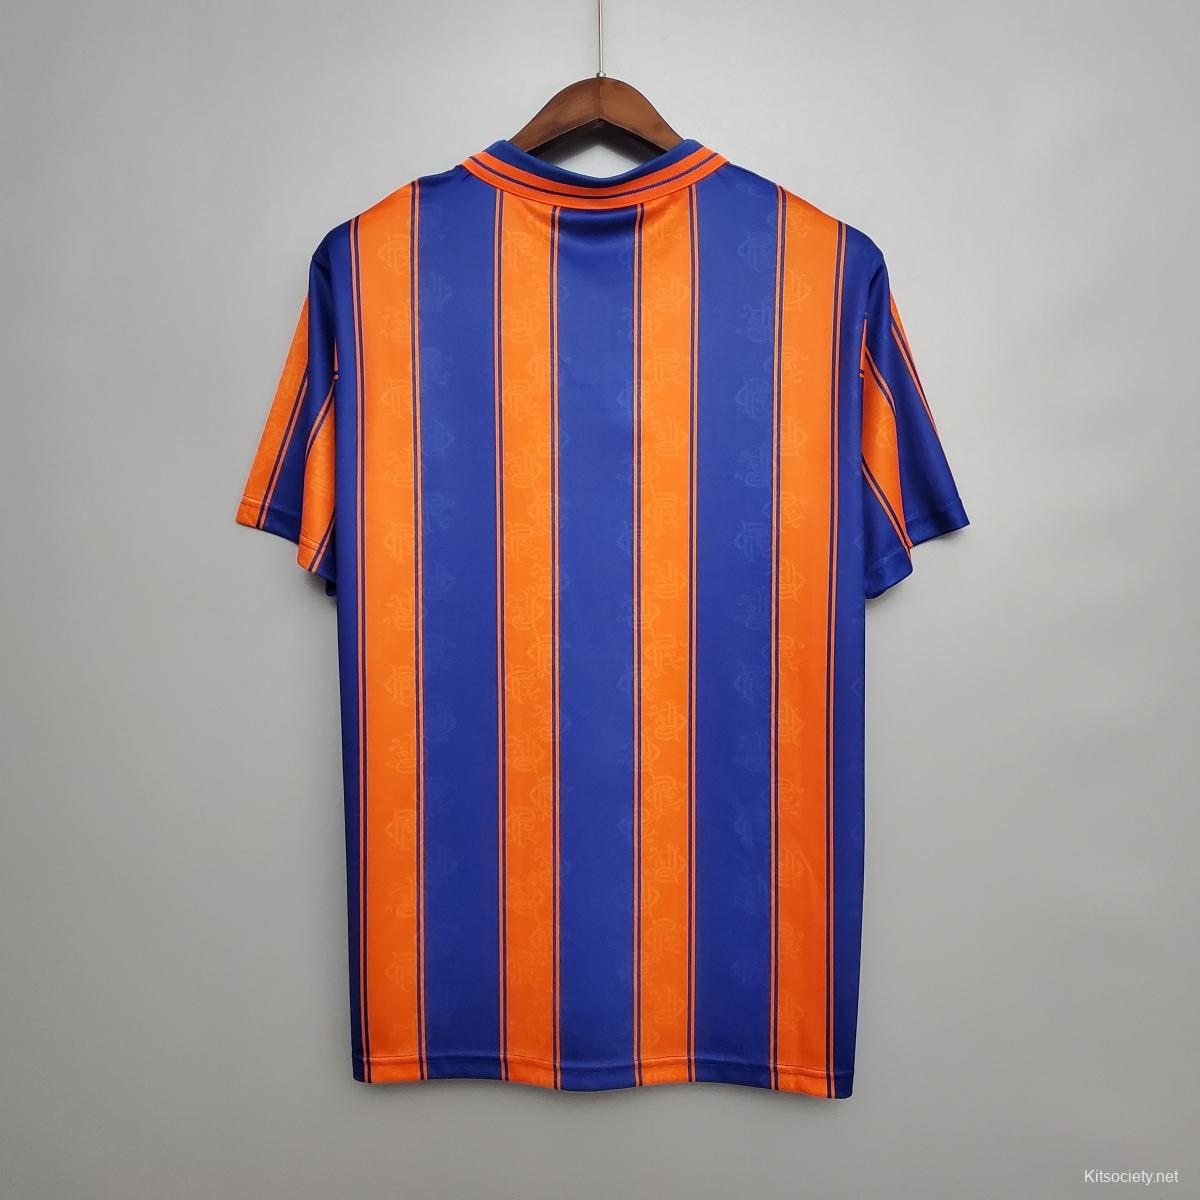 Rangers Third football shirt 1997 - 1998. Sponsored by McEwan's